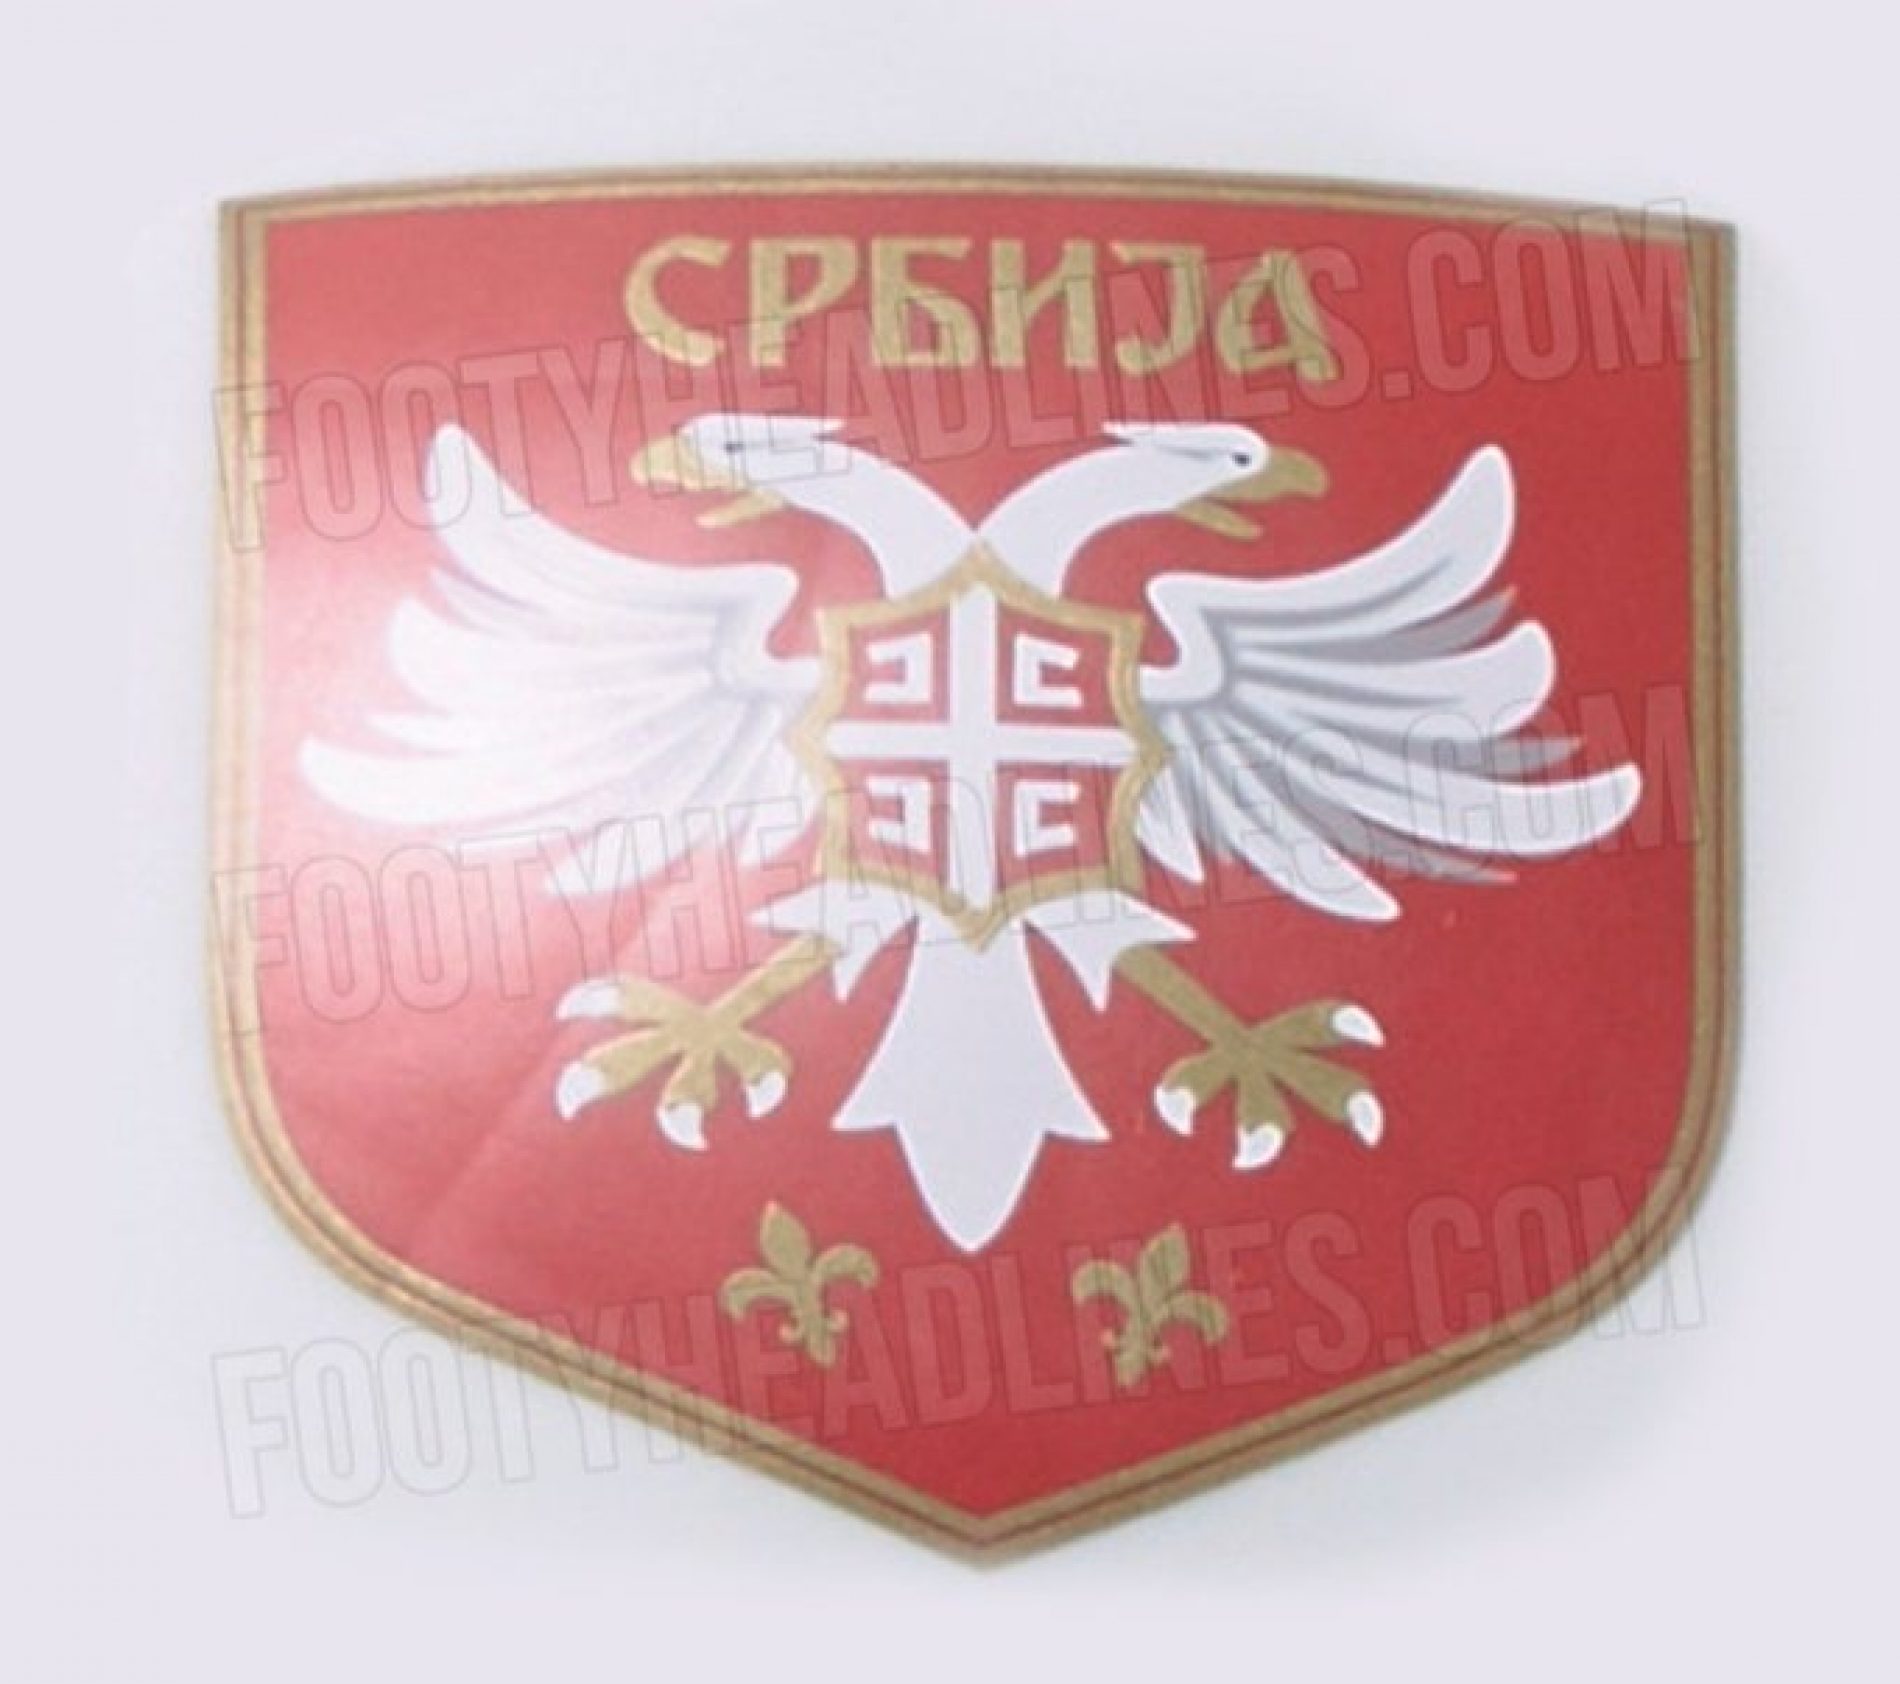 Simboli Srbije – obrnuta ruska zastava, romejski orao, bosanski ljiljan